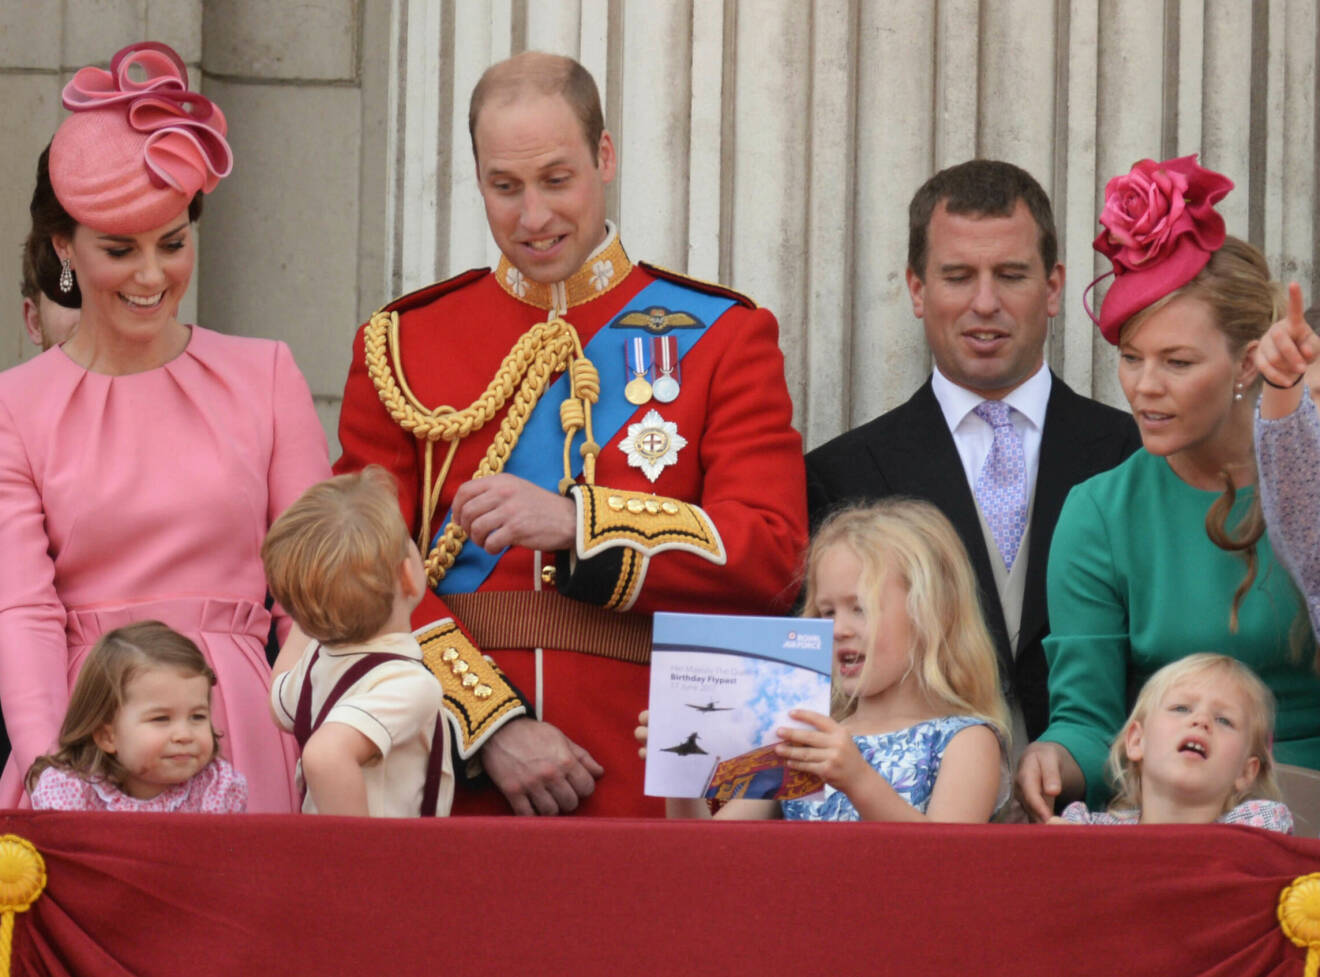 Prinsessan Annes son Peter Phillips med sin kusin prins William och prinsessan Kate